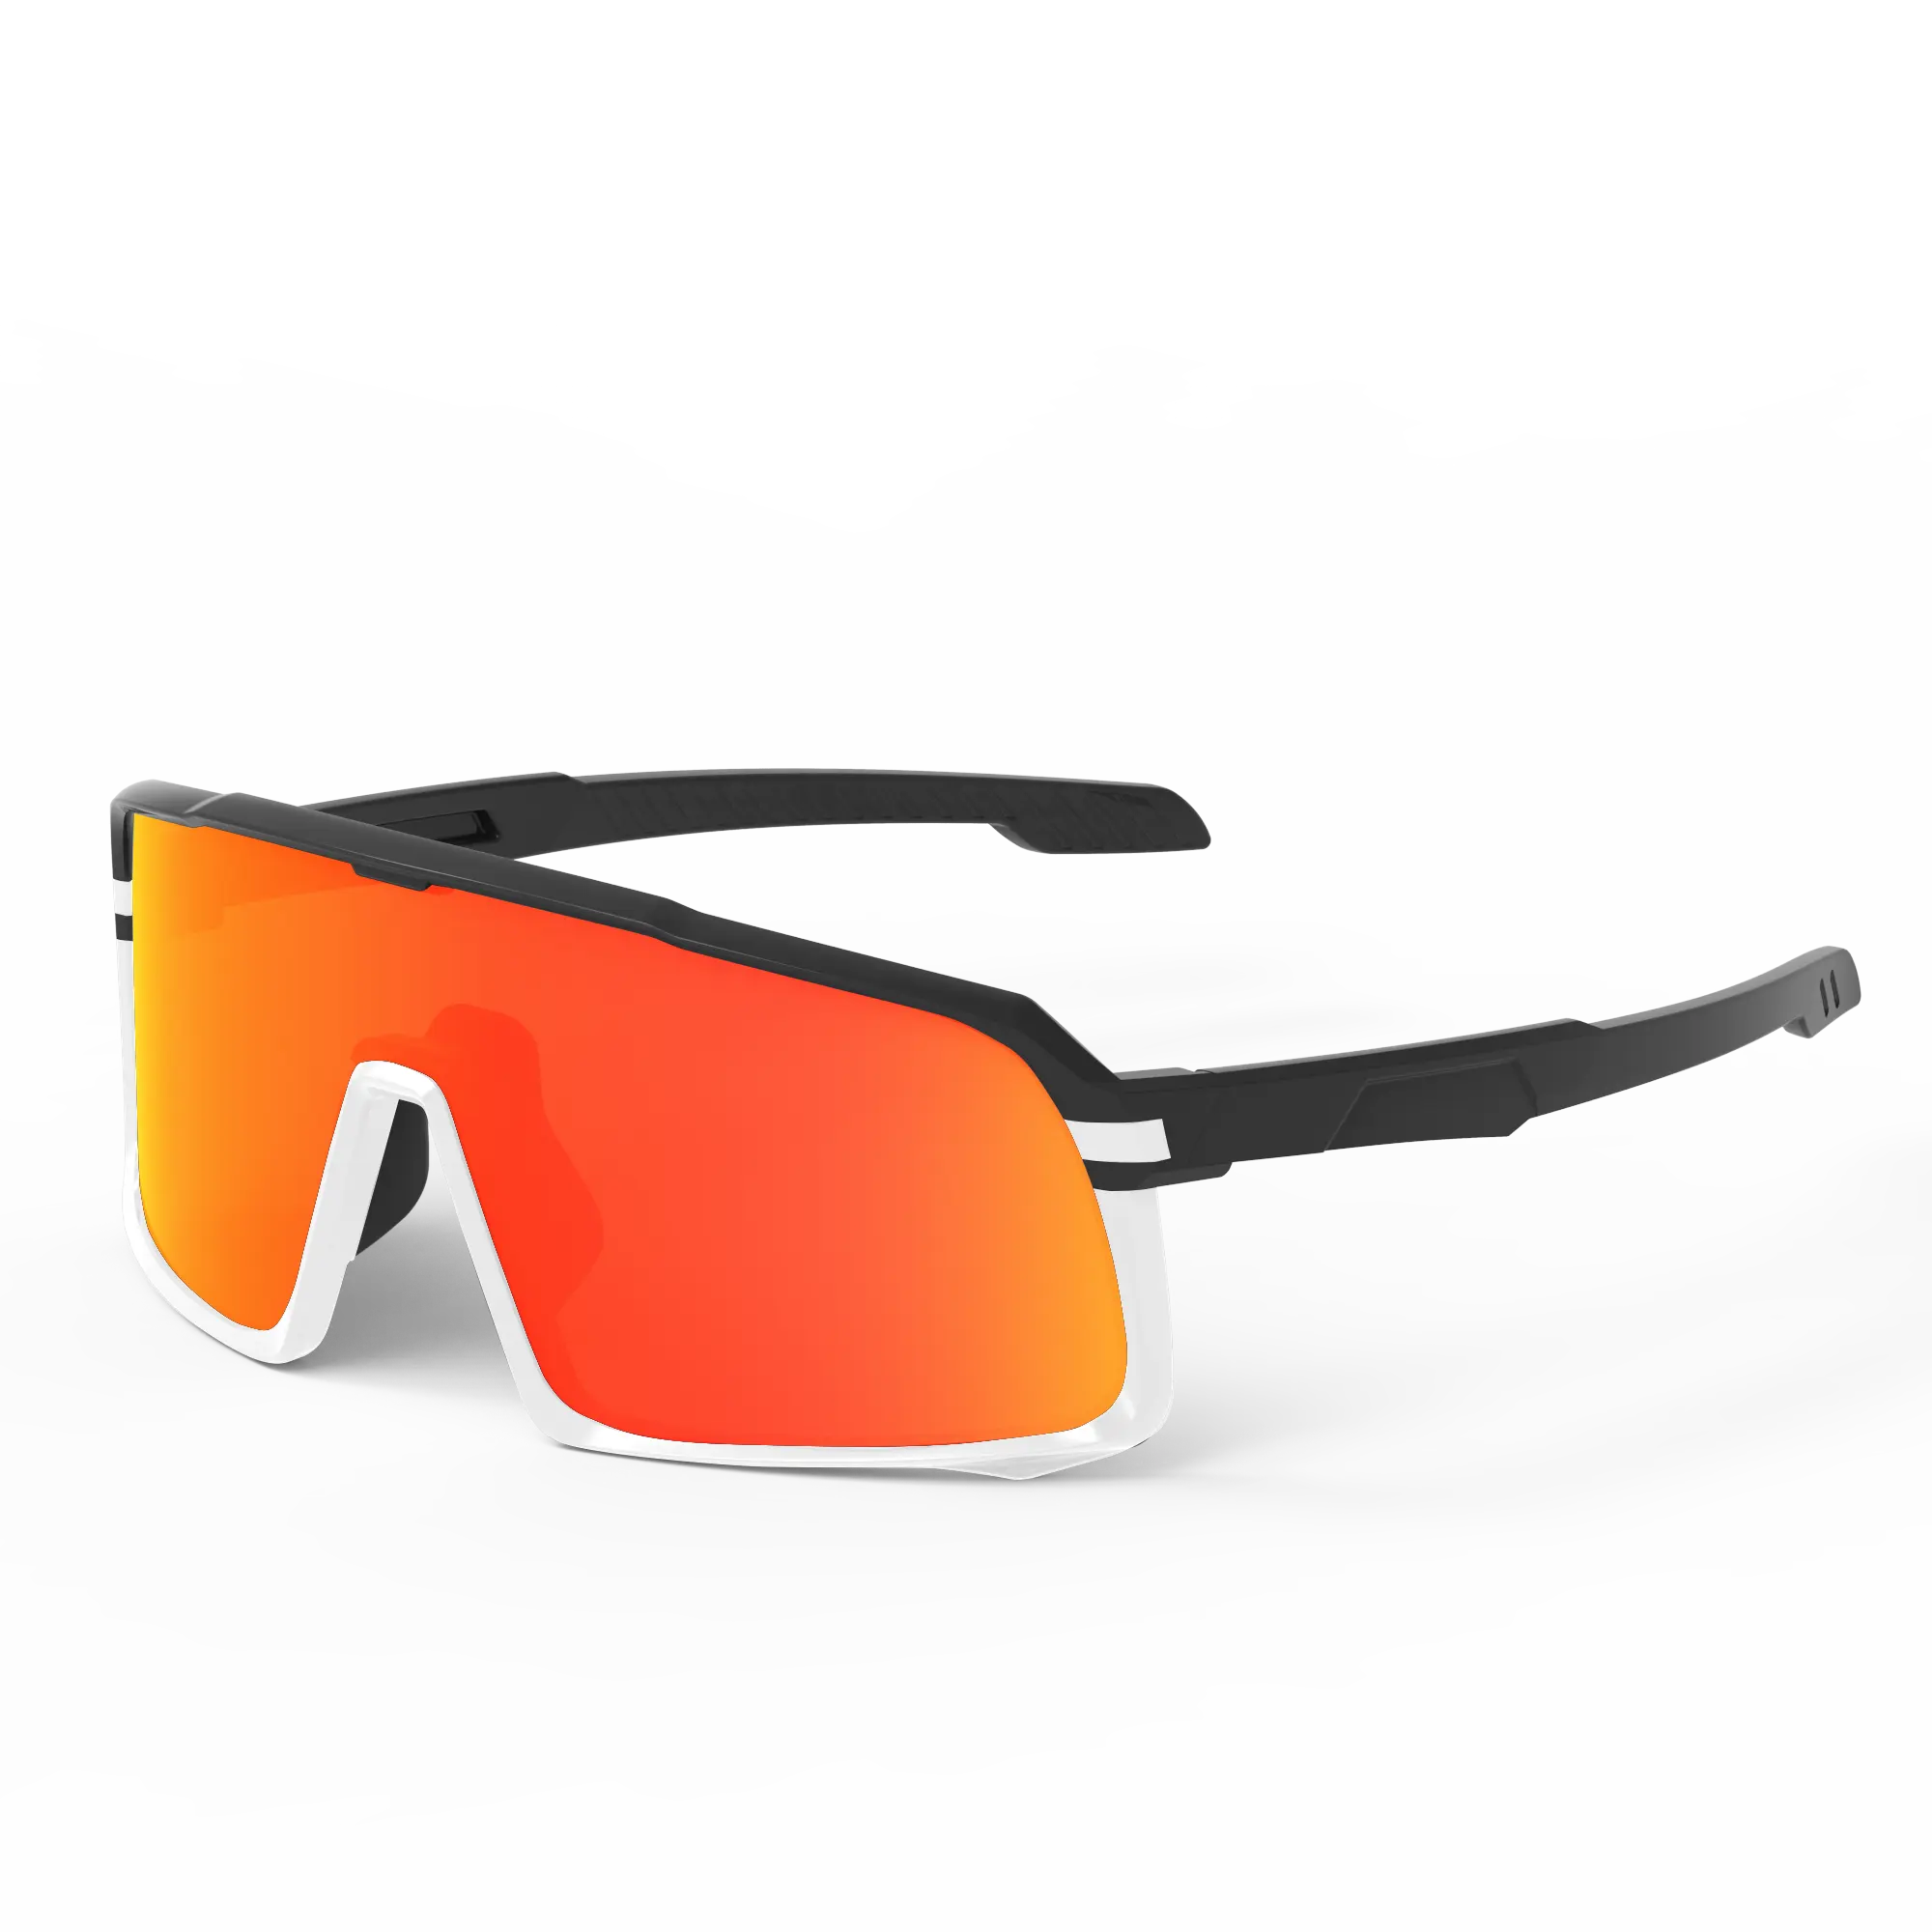 SUNOK polarized sport sunglasses anti UV Interchangeable lens bicycle MTB bike sunglasses custom cycling glasses